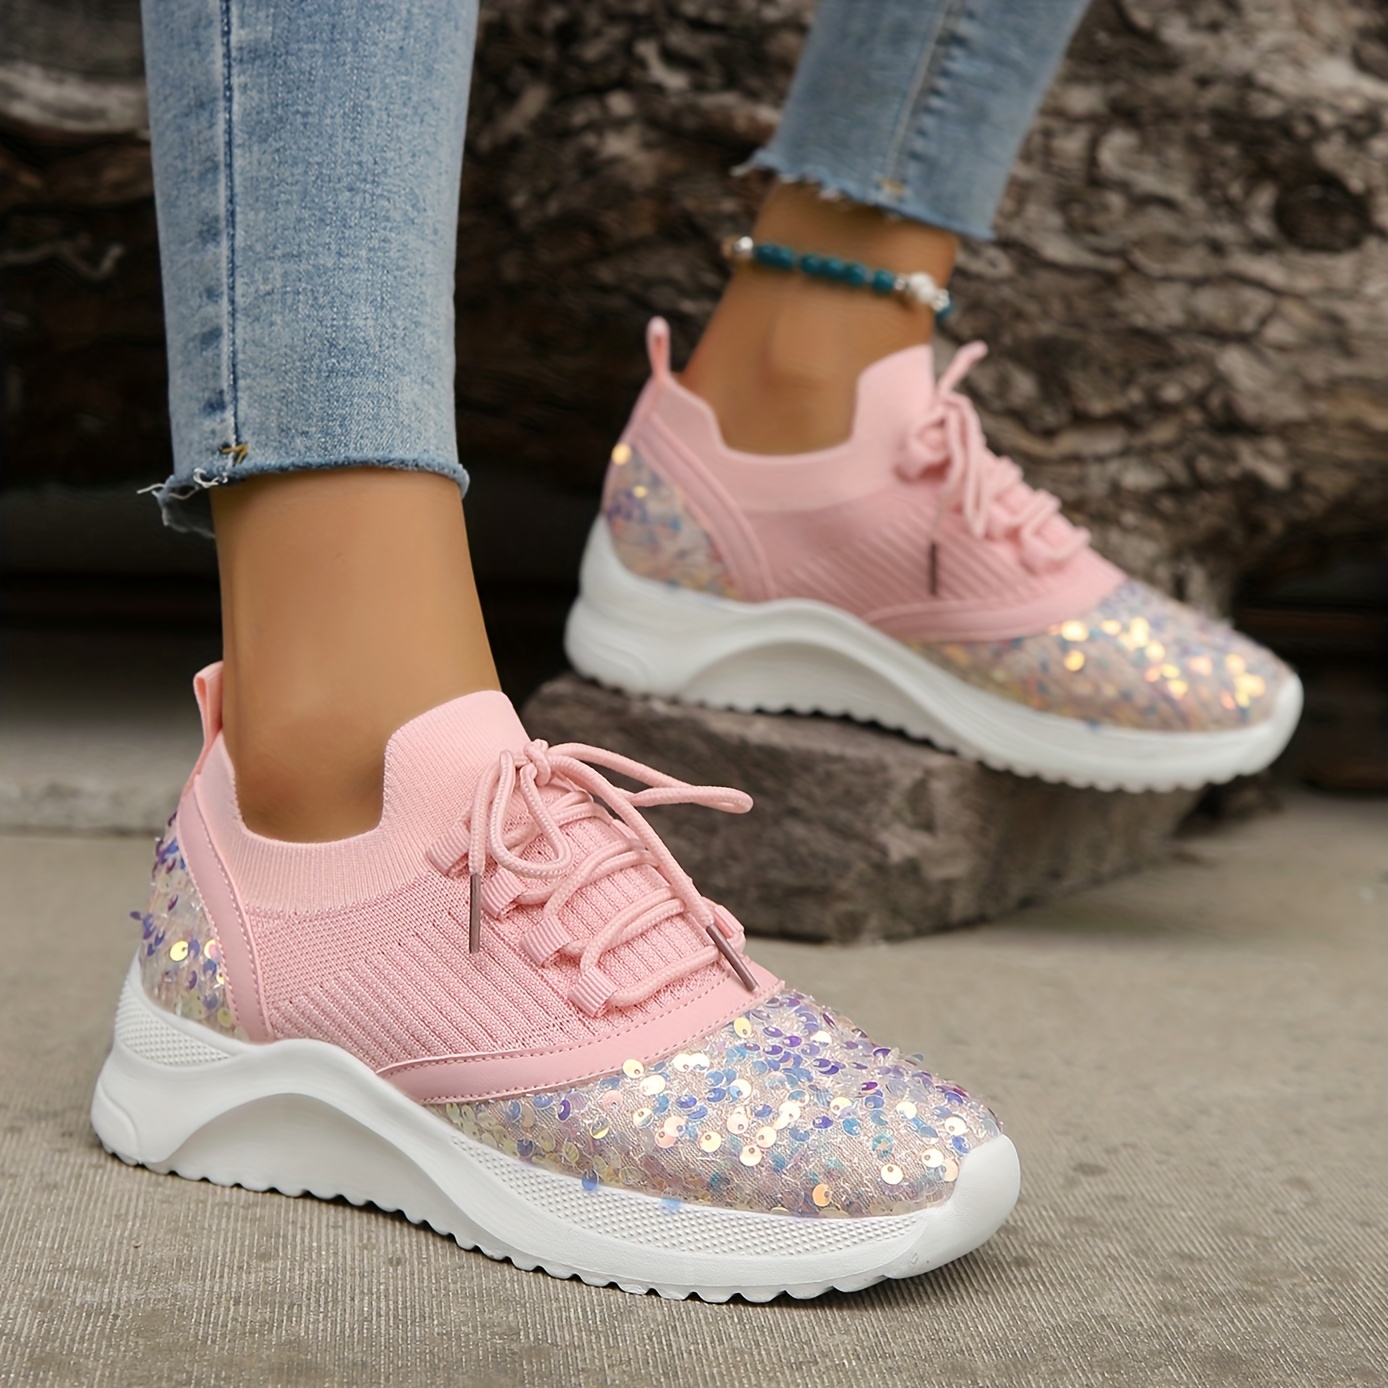 Womens Lightweight Sneaker Walking Fashion Shoes Glitter Hot Pink All Sizes